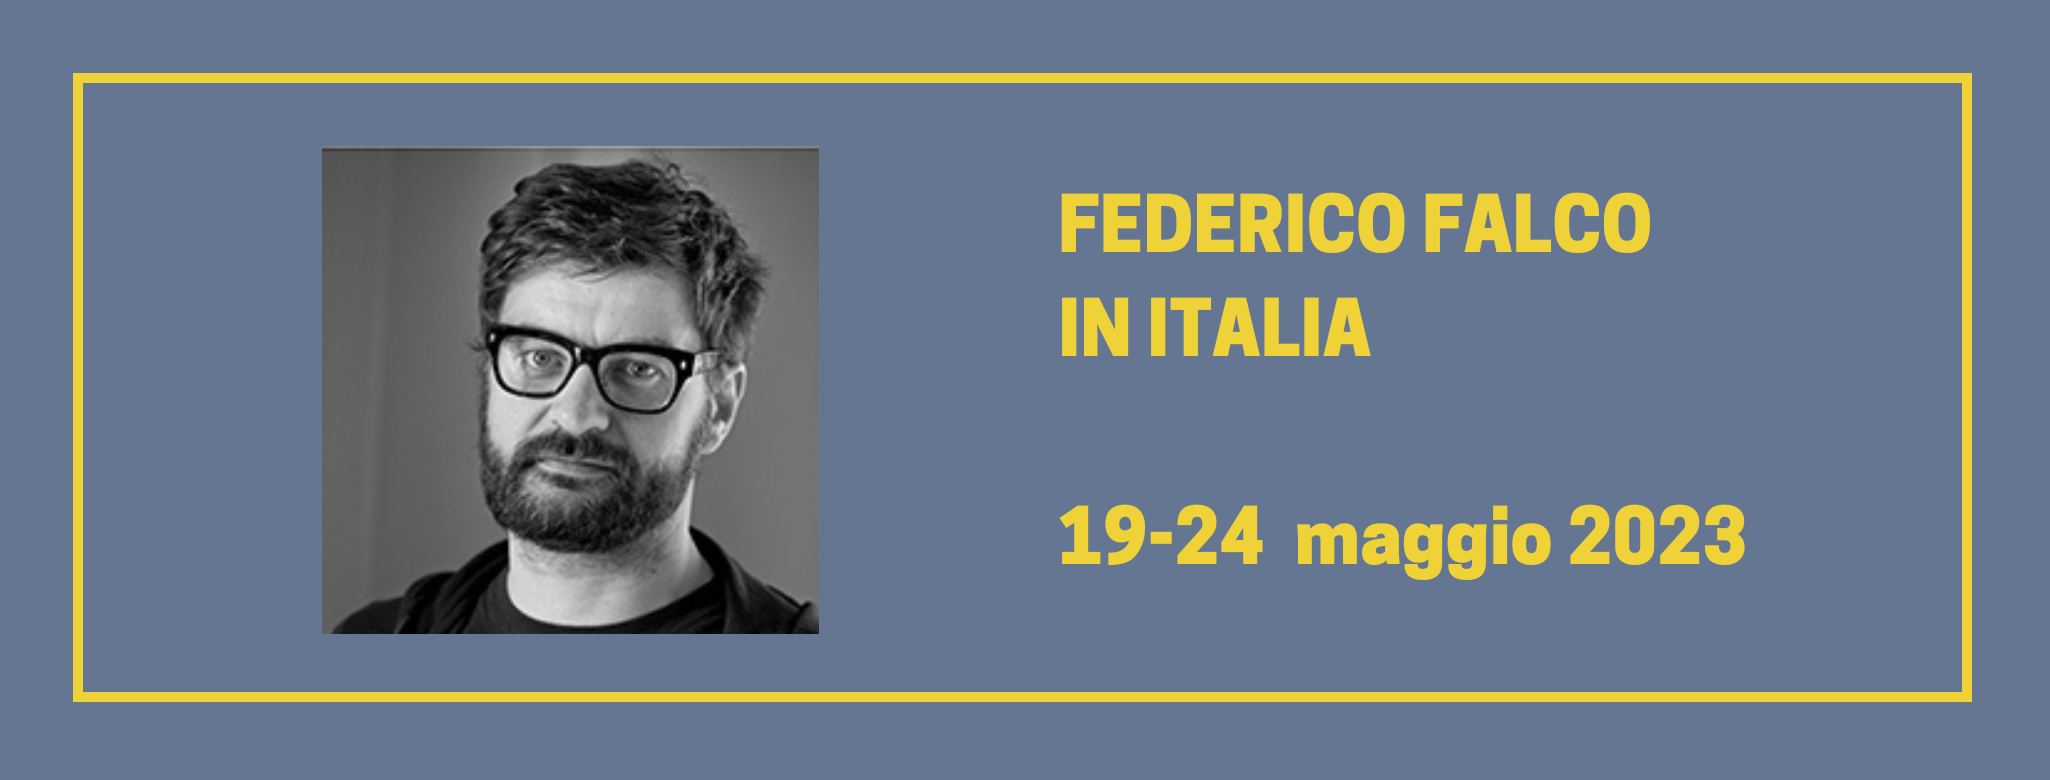 Federico Falco in Italia